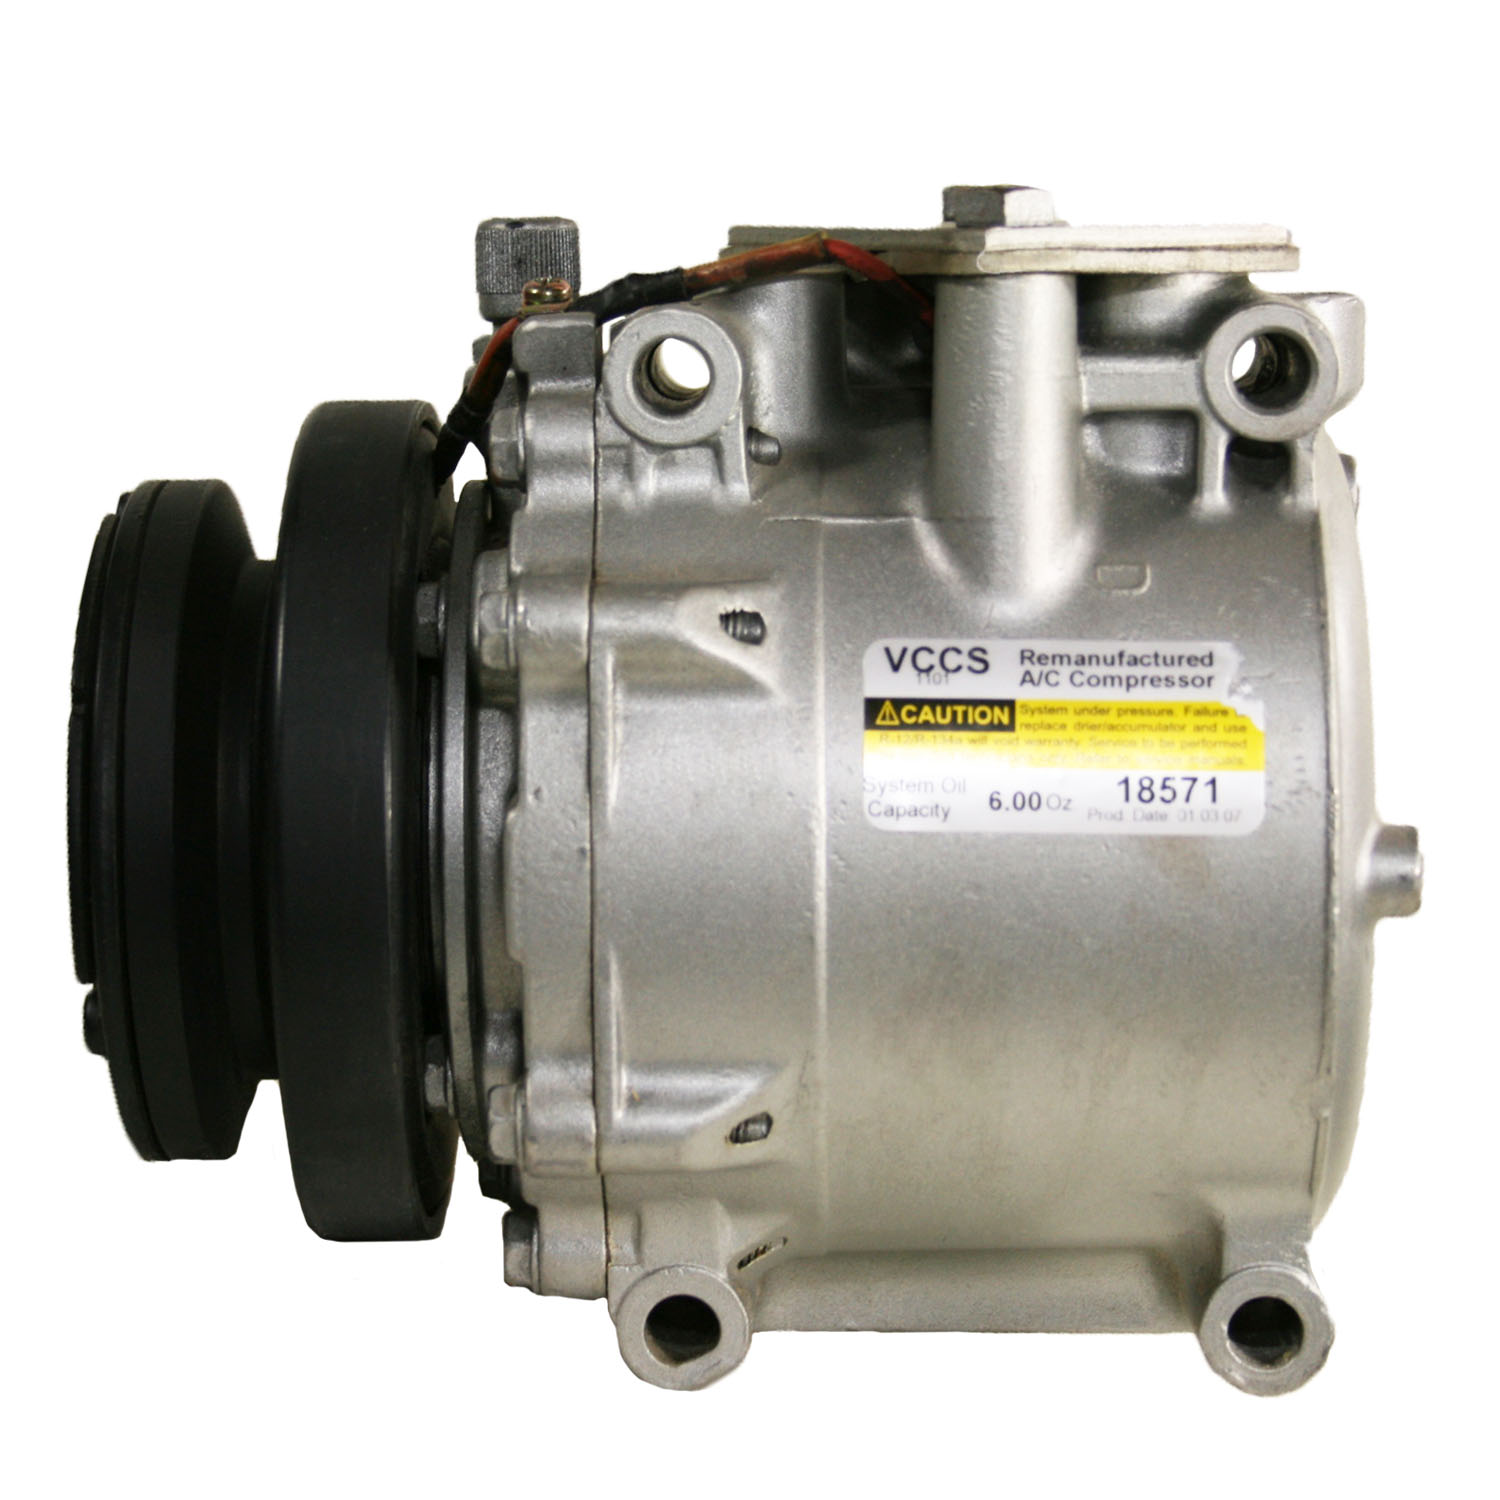 TCW Compressor 40800.101 Remanufactured Product Image field_60b6a13a6e67c